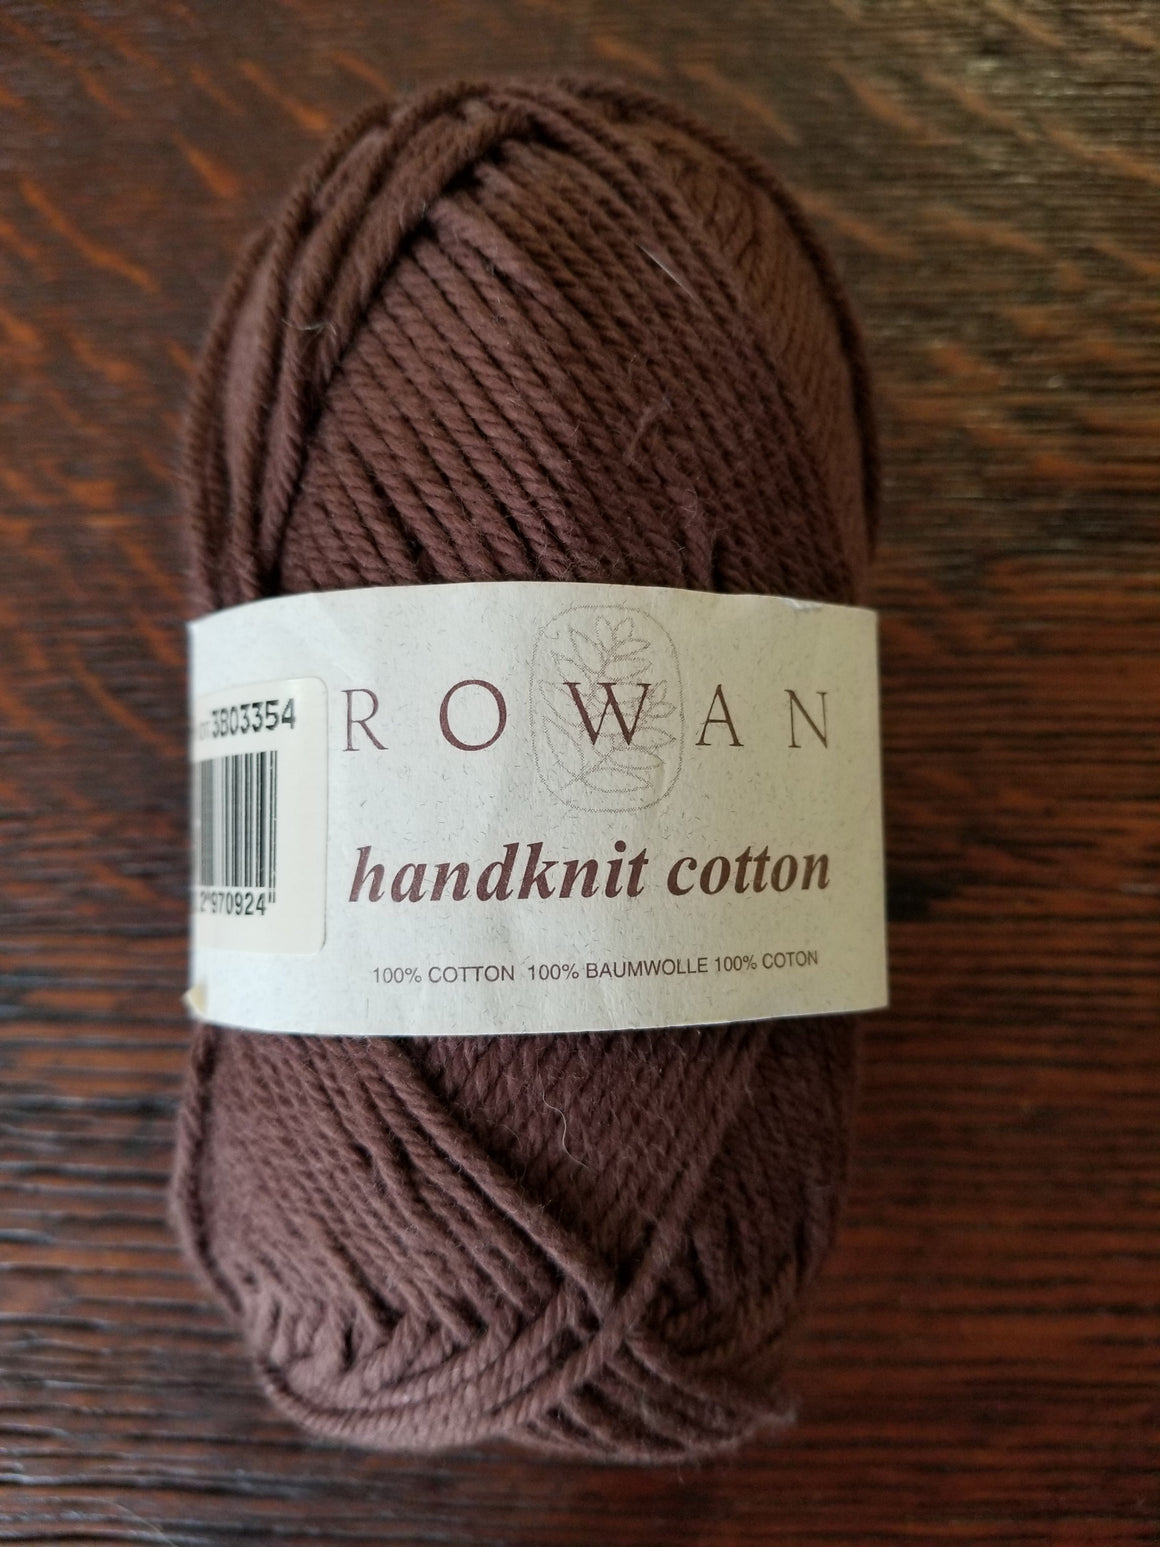 Handknit Cotton by Rowan